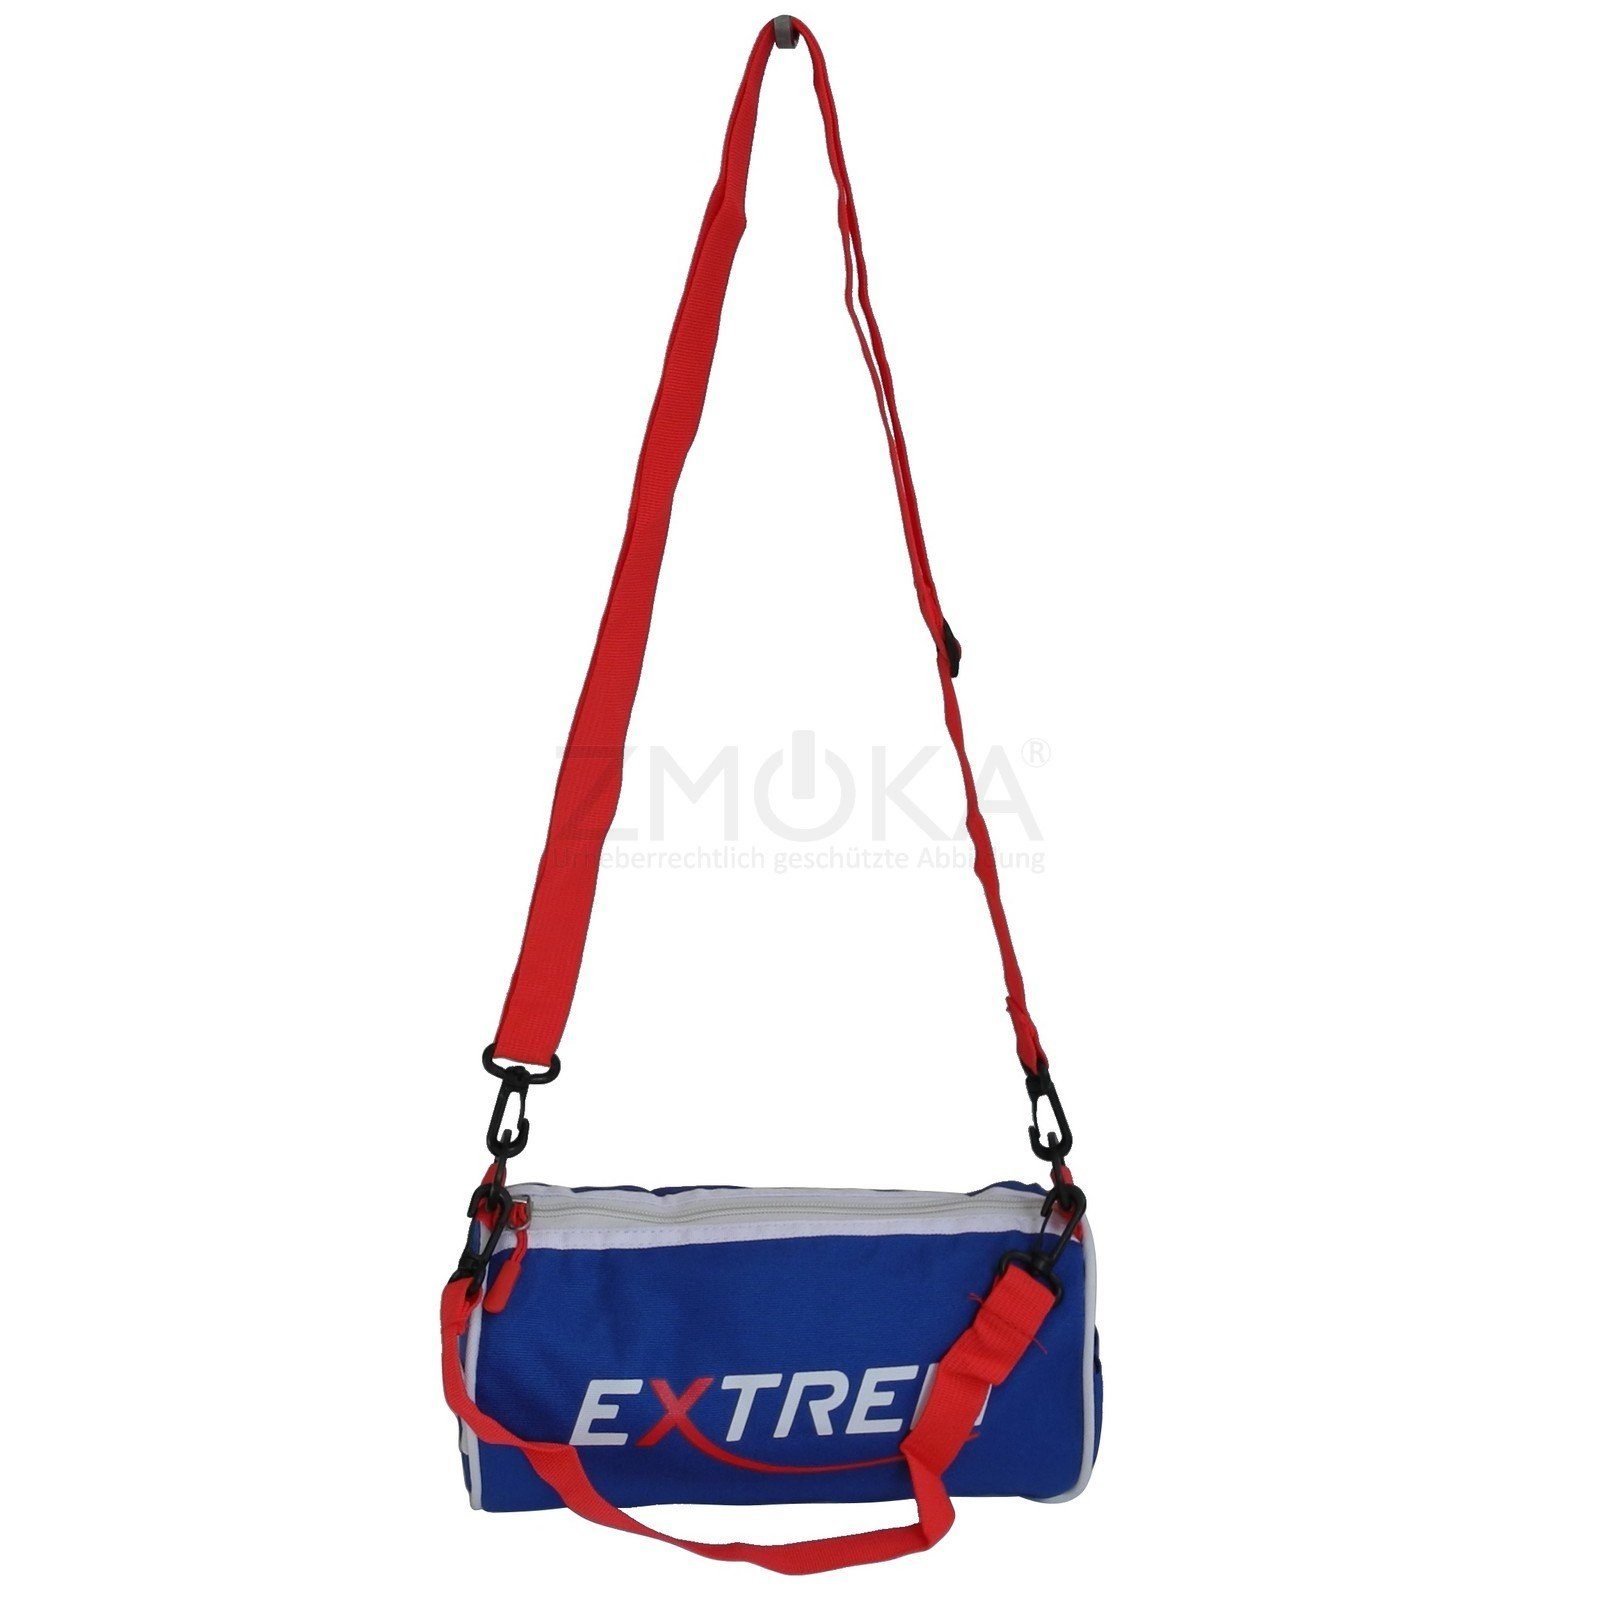 BAG STREET Umhängetasche Bag Street - Extreme Uni Crossbody Bag Umhängetasche Auswahl Blau